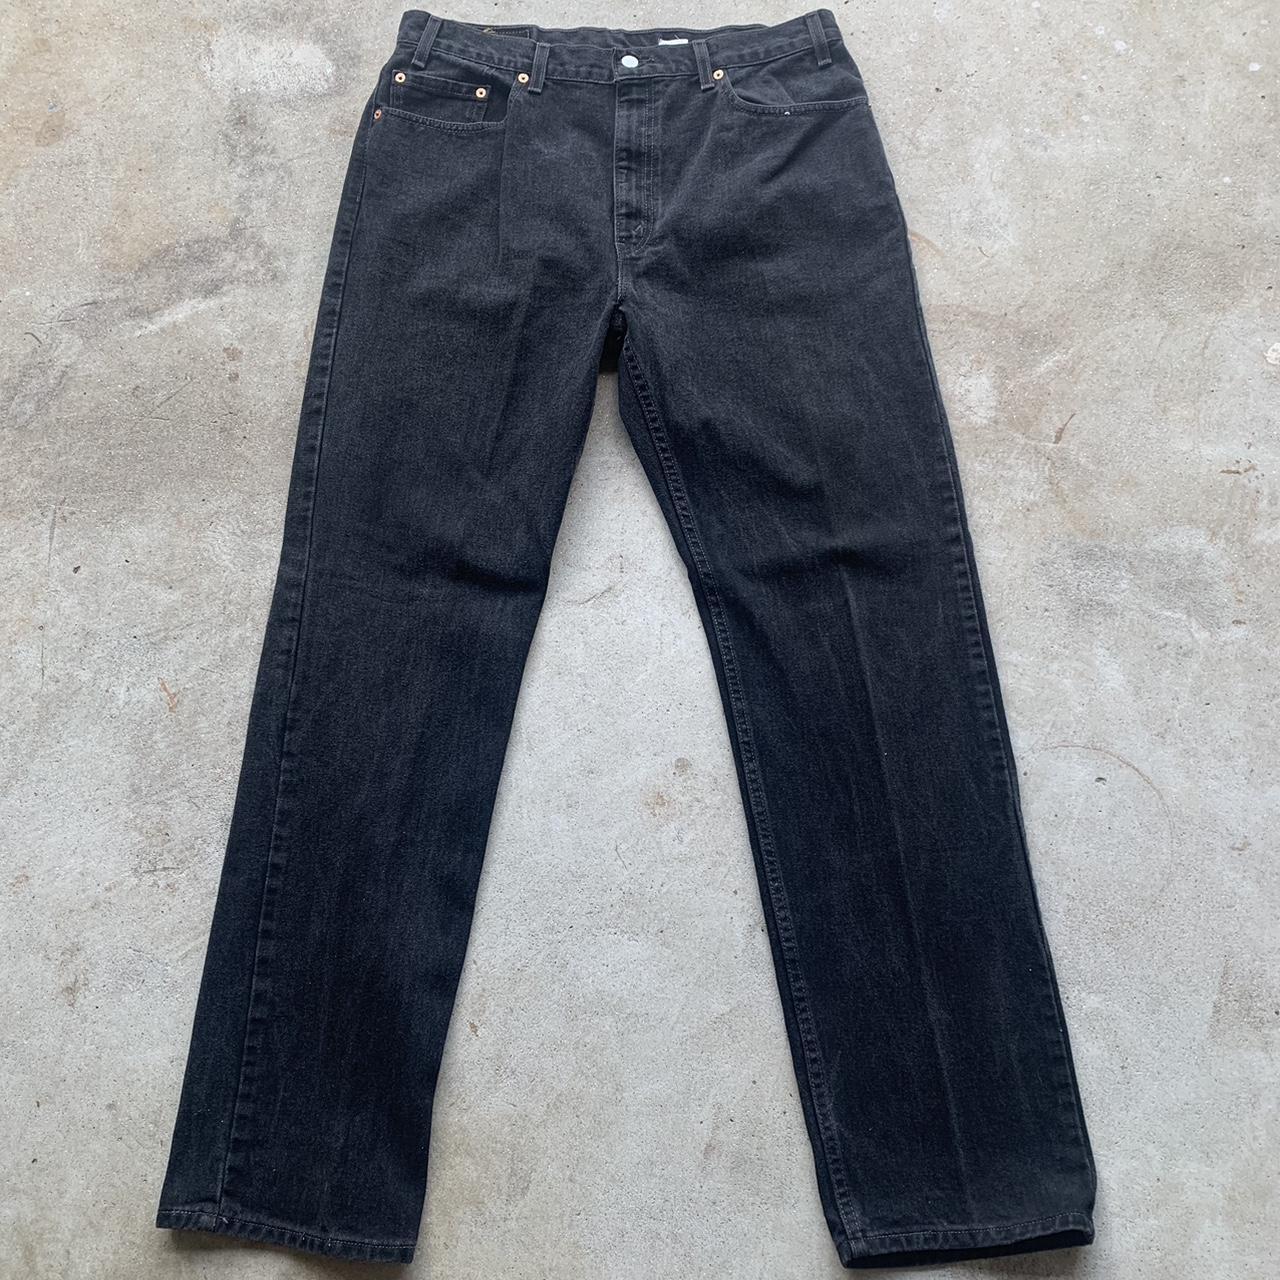 Vintage Levi Jeans 🖤 Measures 36x34 Free Shipping! - Depop